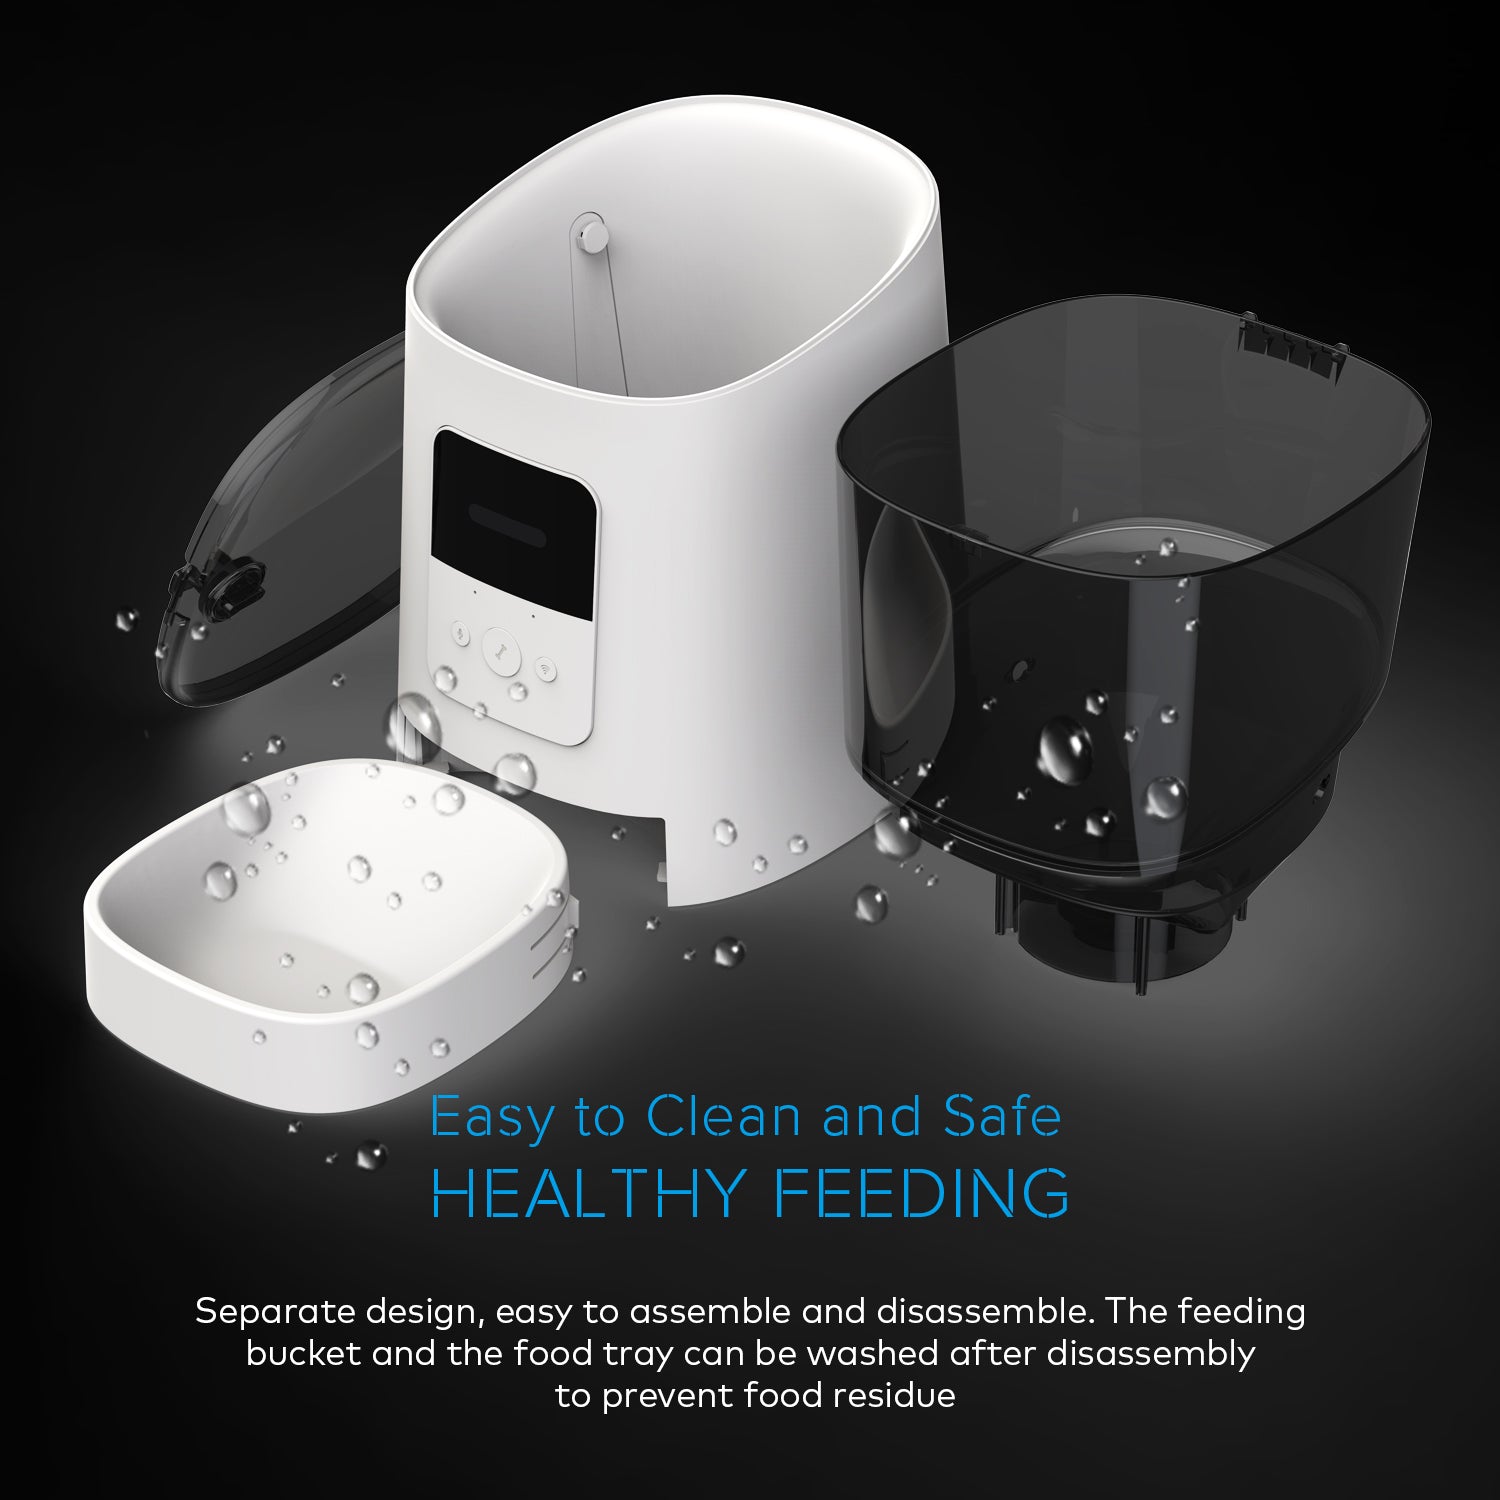 SMARTPAWBurpurr Premium Pet Feeder (Wifi Version) - Easy to Clean and Safe Healthy Feeding